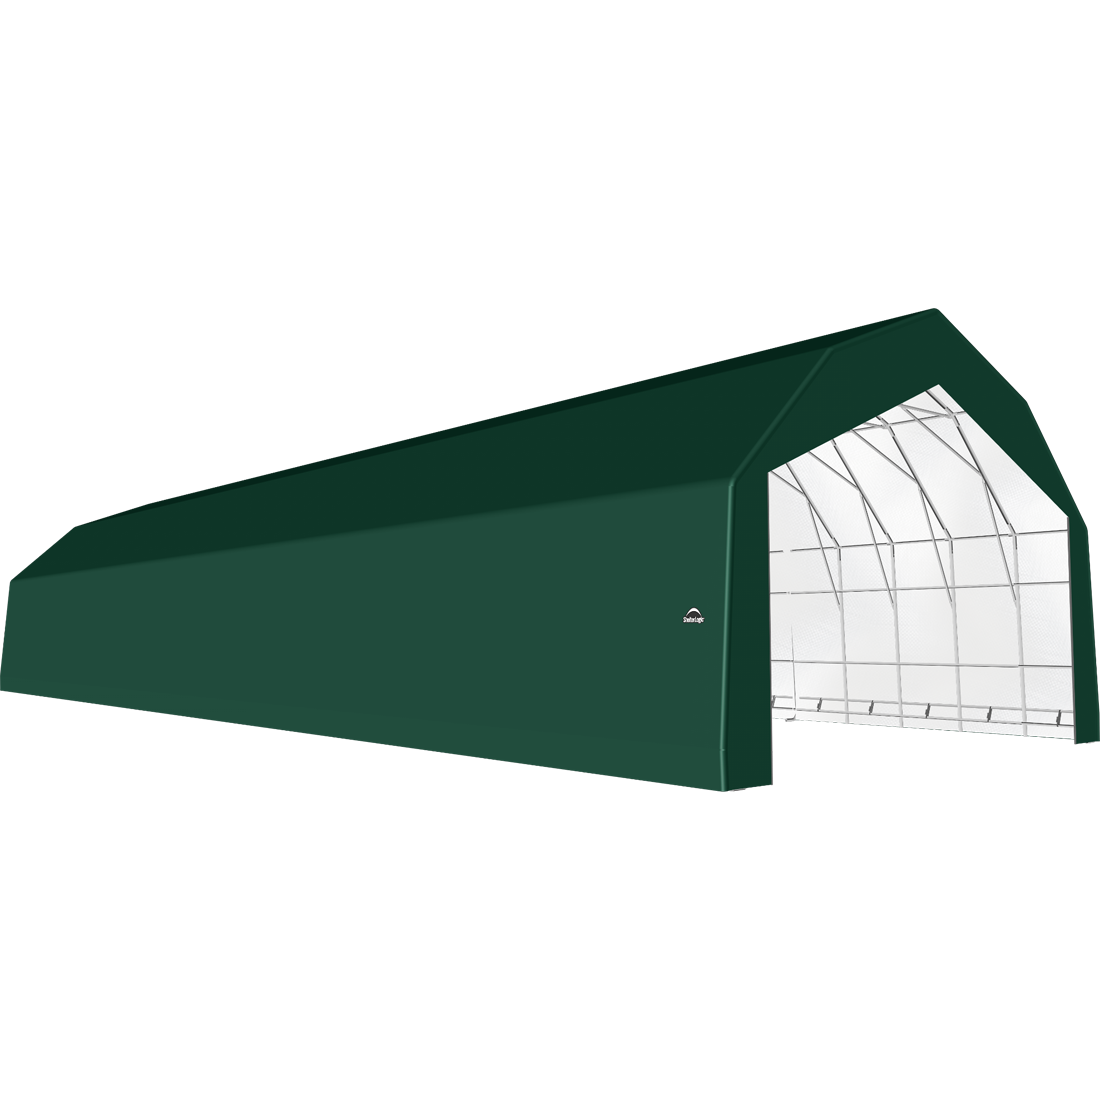 ShelterTech SP Series Barn Shelter, 30 ft. x 100 ft. x 21 ft. Heavy Duty PVC 14.5 oz. Green